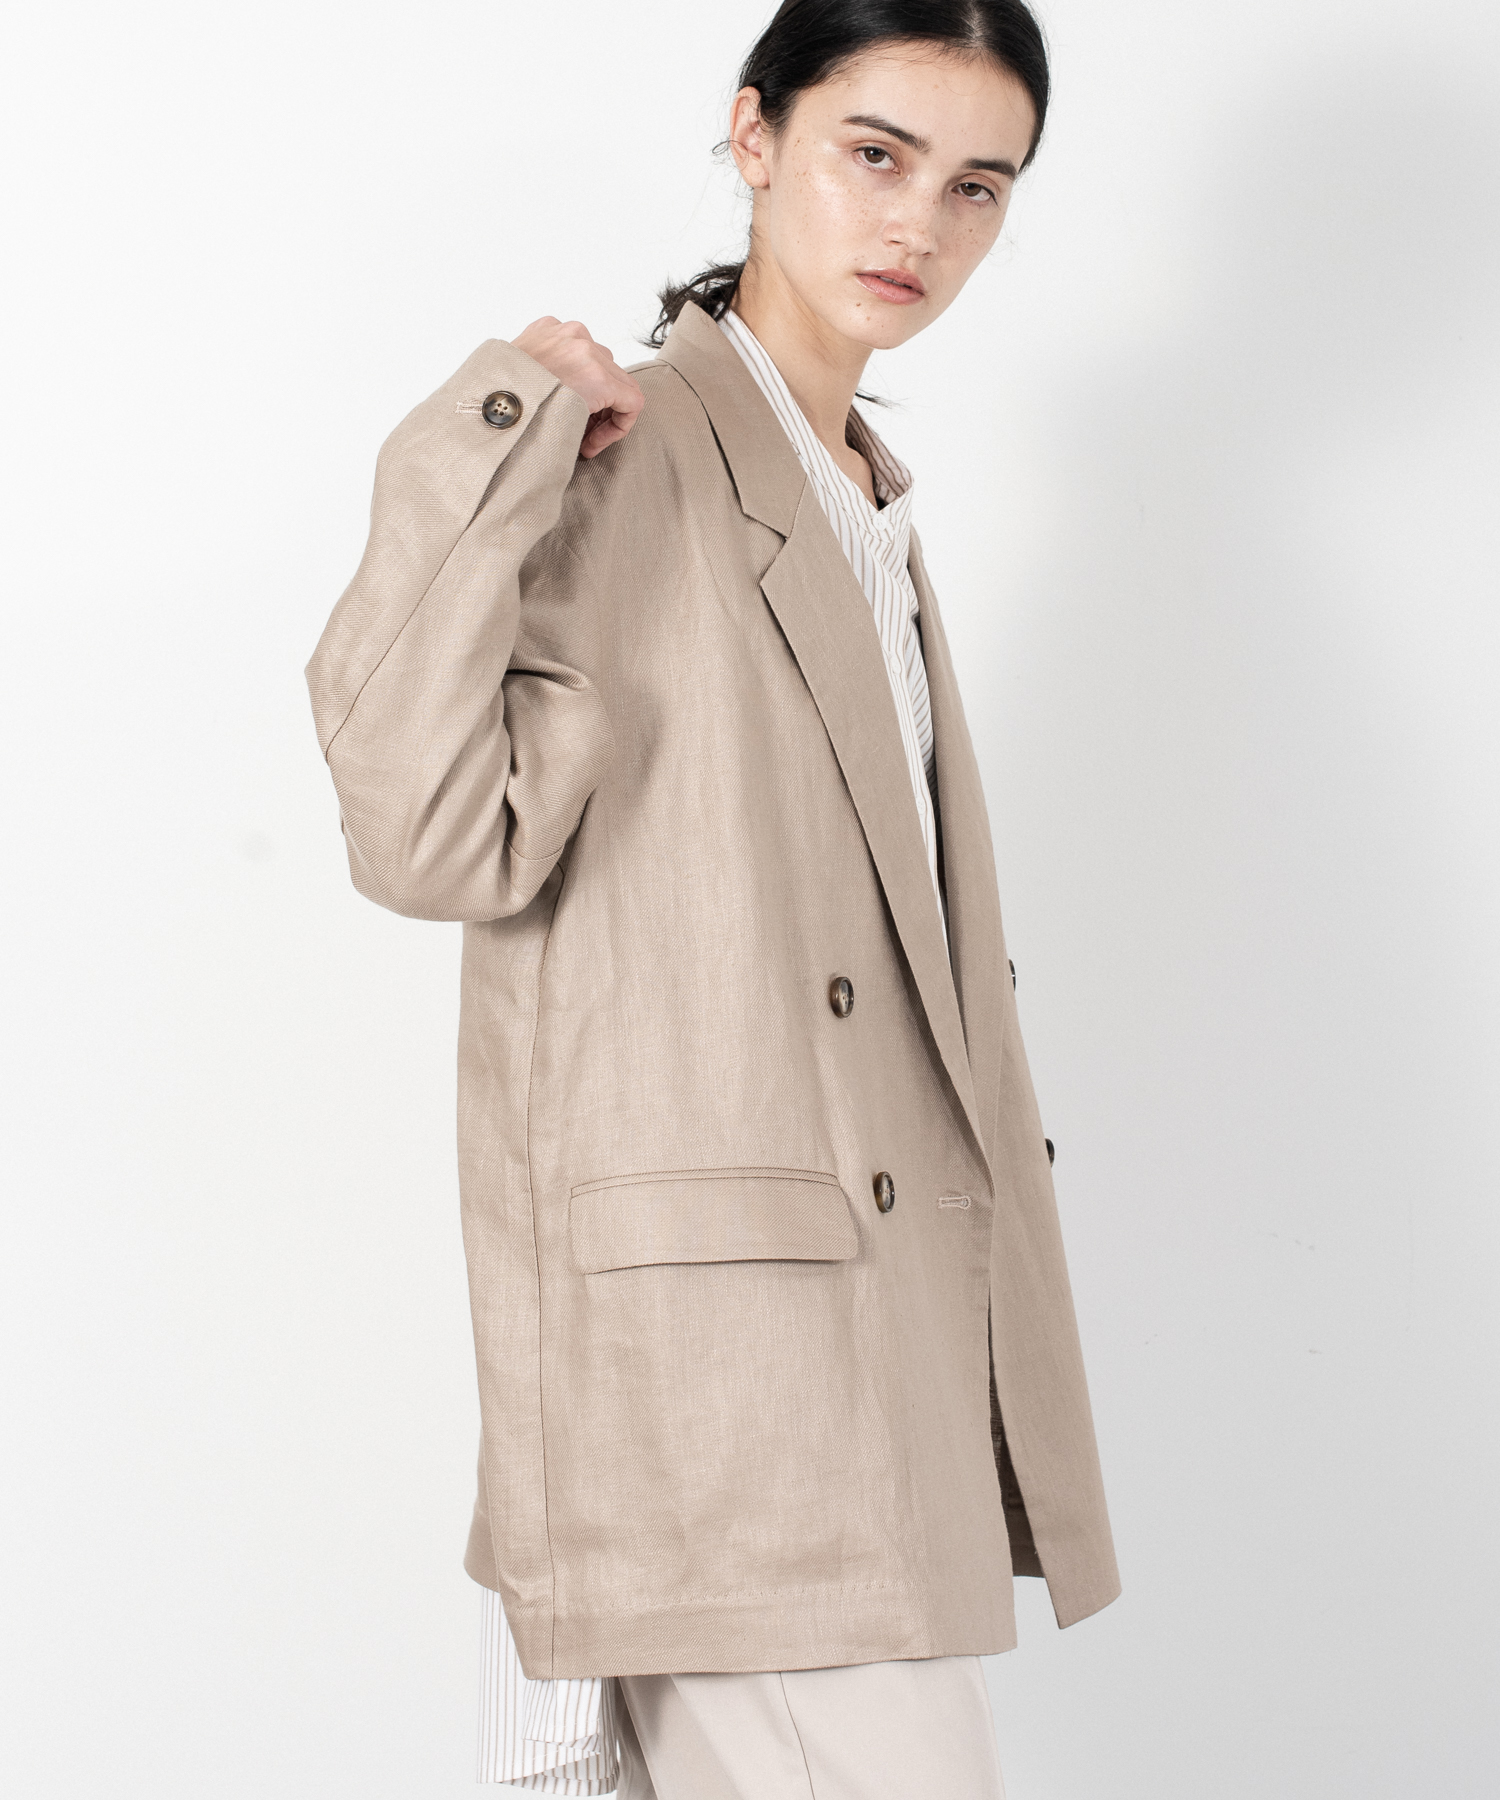 Linen Loose Silhouette Tailored Jacket  - BEIGE